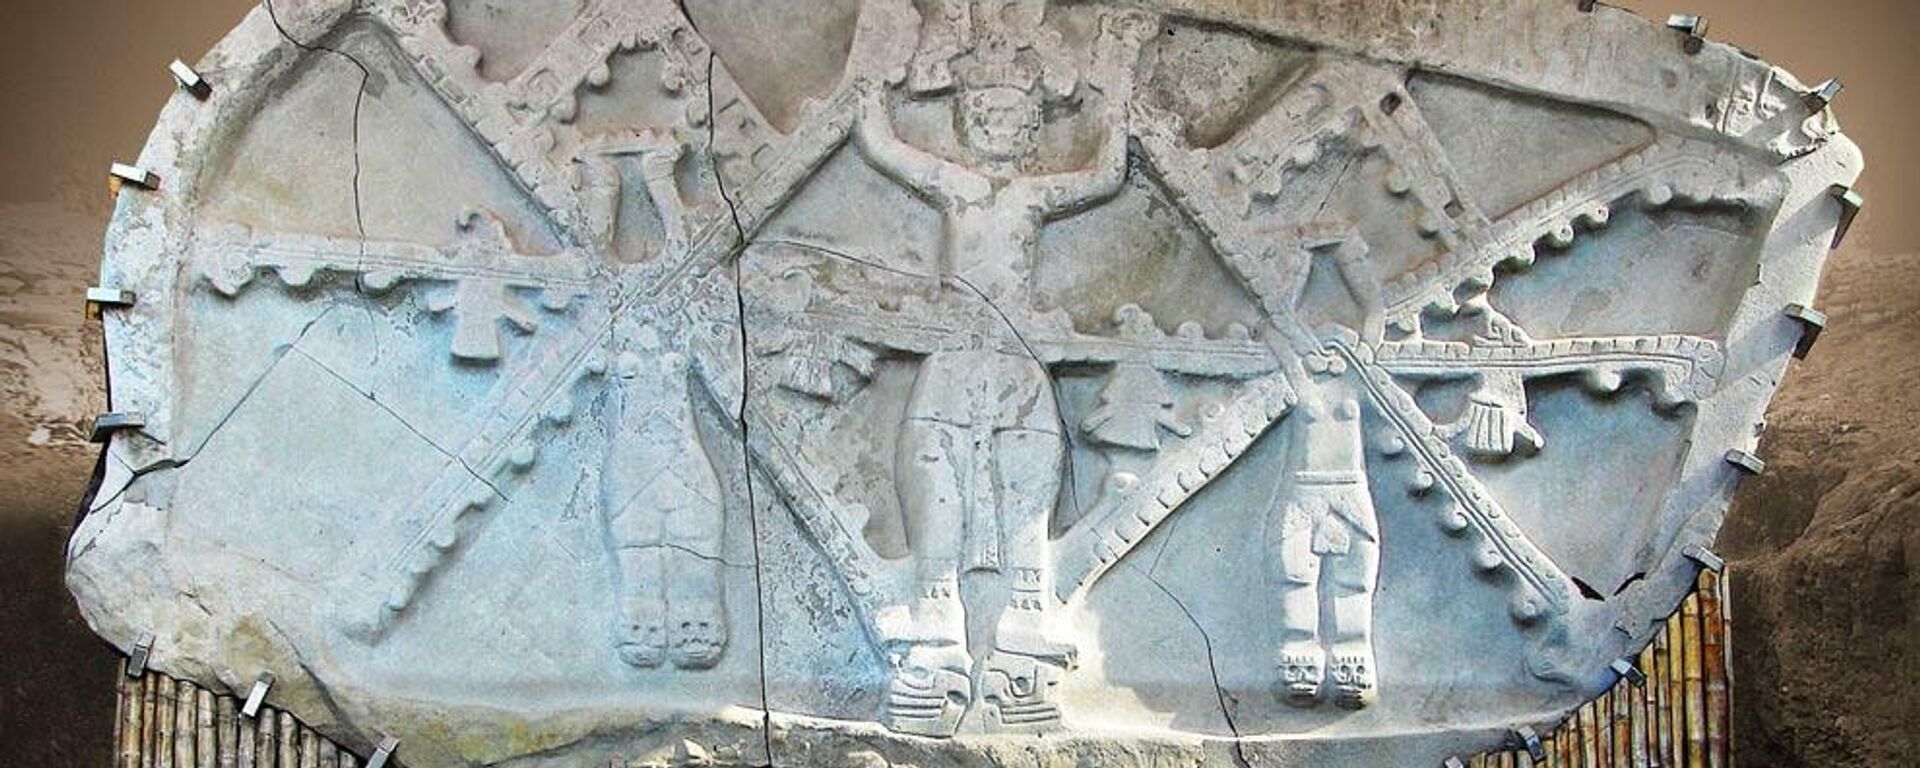 Obra de la mesoamericana cultura huasteca. - Sputnik Mundo, 1920, 04.02.2022